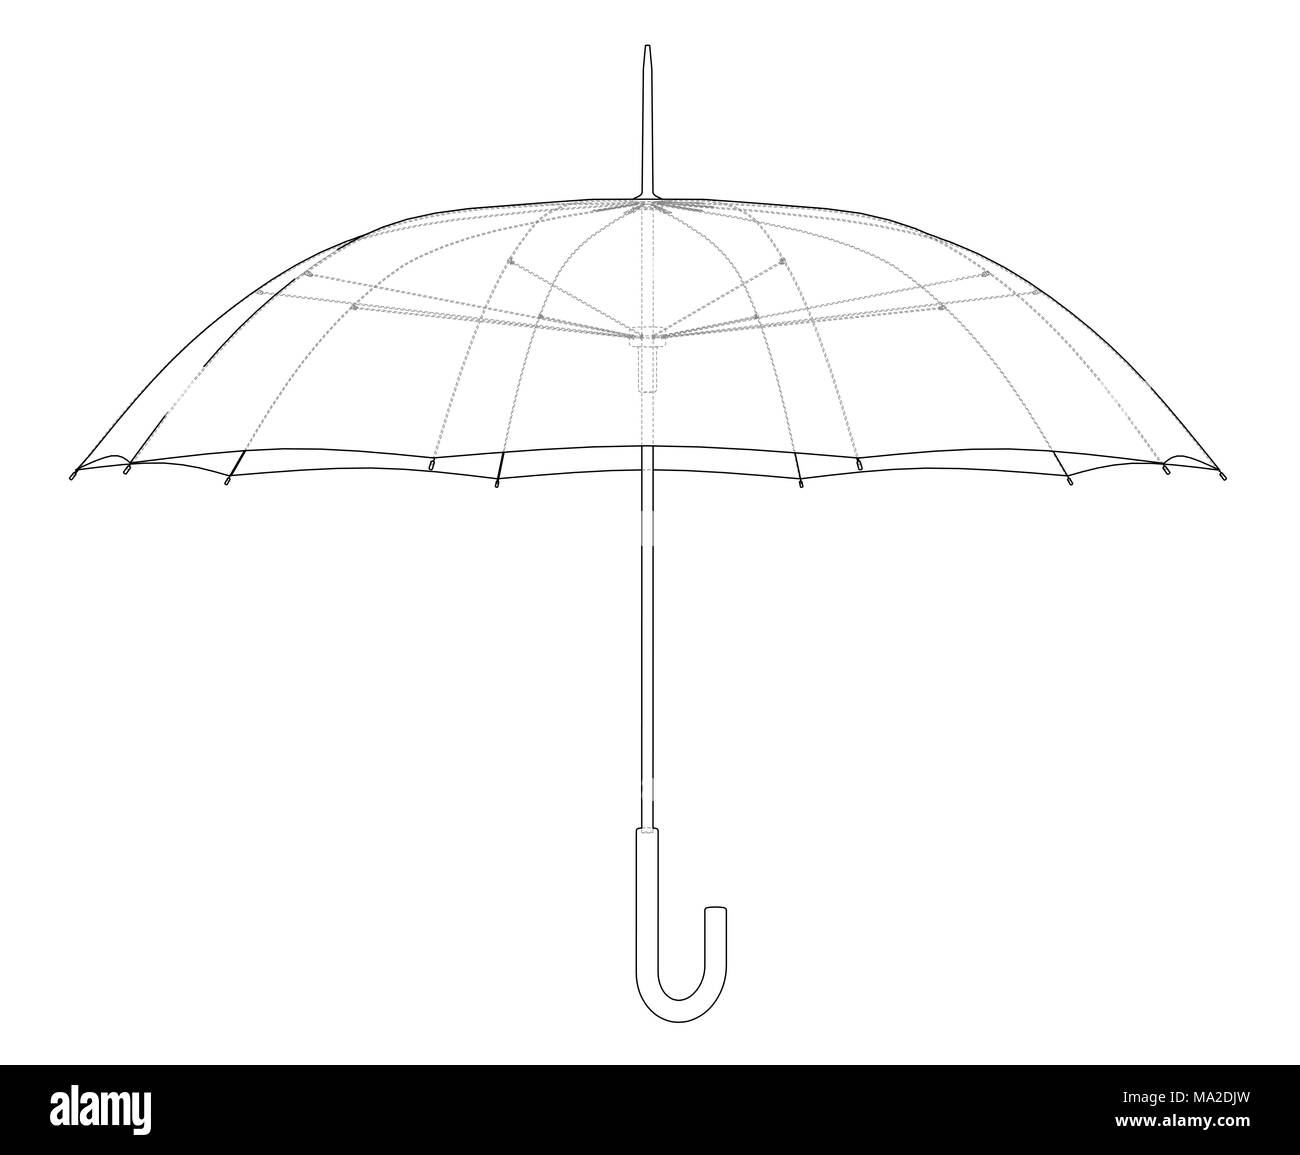 74,877 Umbrella Drawing Images, Stock Photos & Vectors | Shutterstock